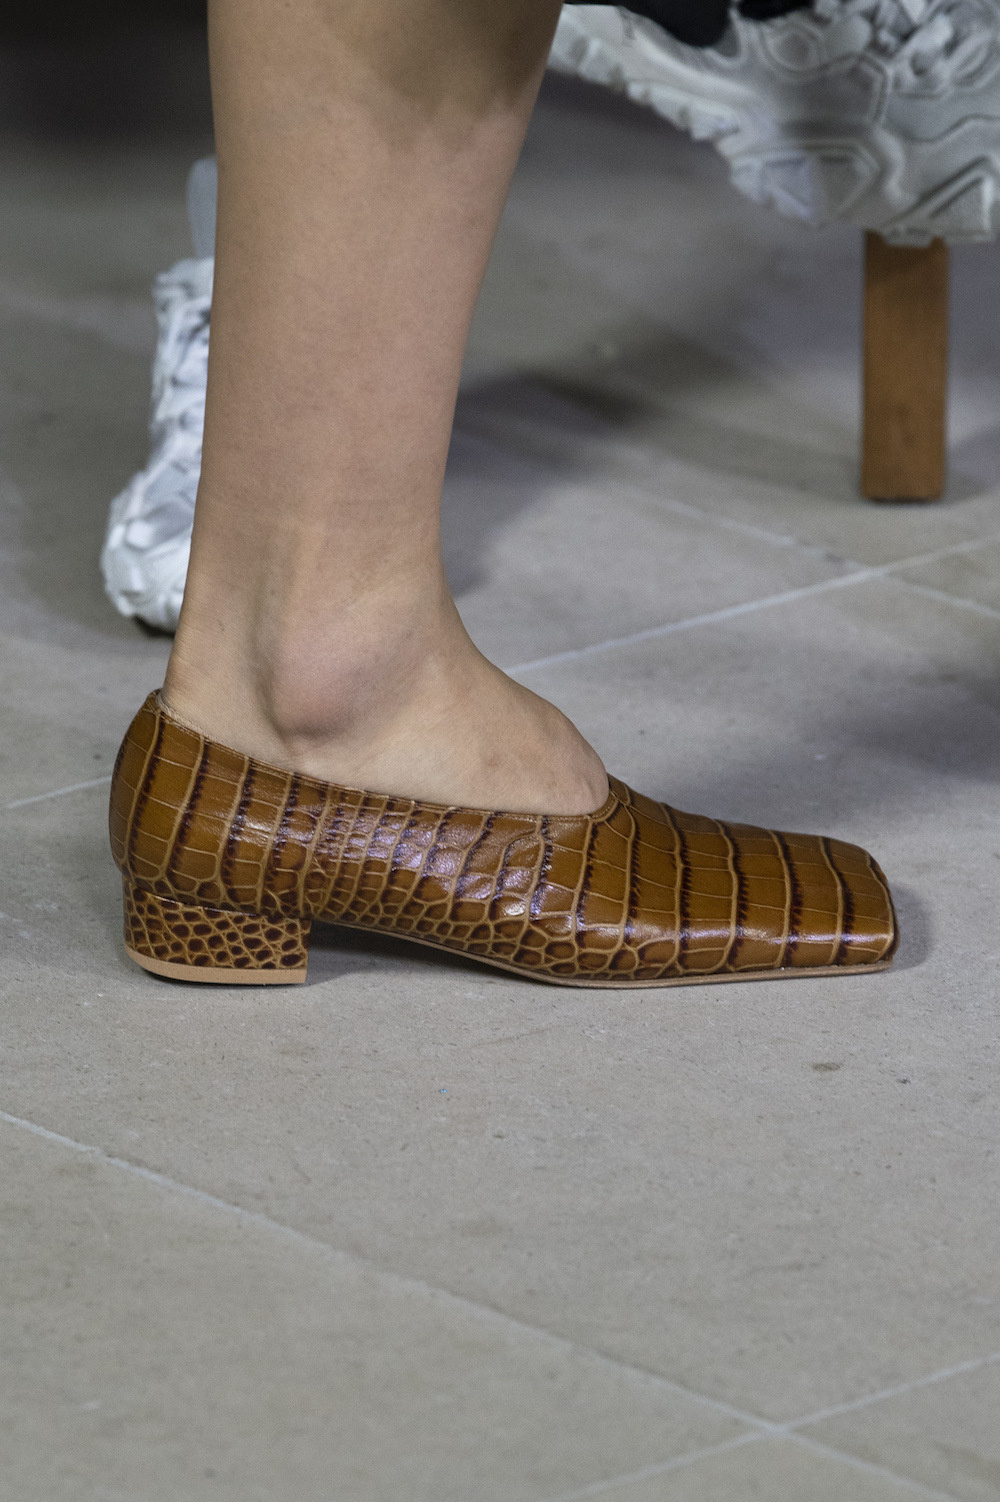 Обувь сезона весна-лето 2020: вьетнамки, вязаные сапоги и «мамины мюли» (фото 11)